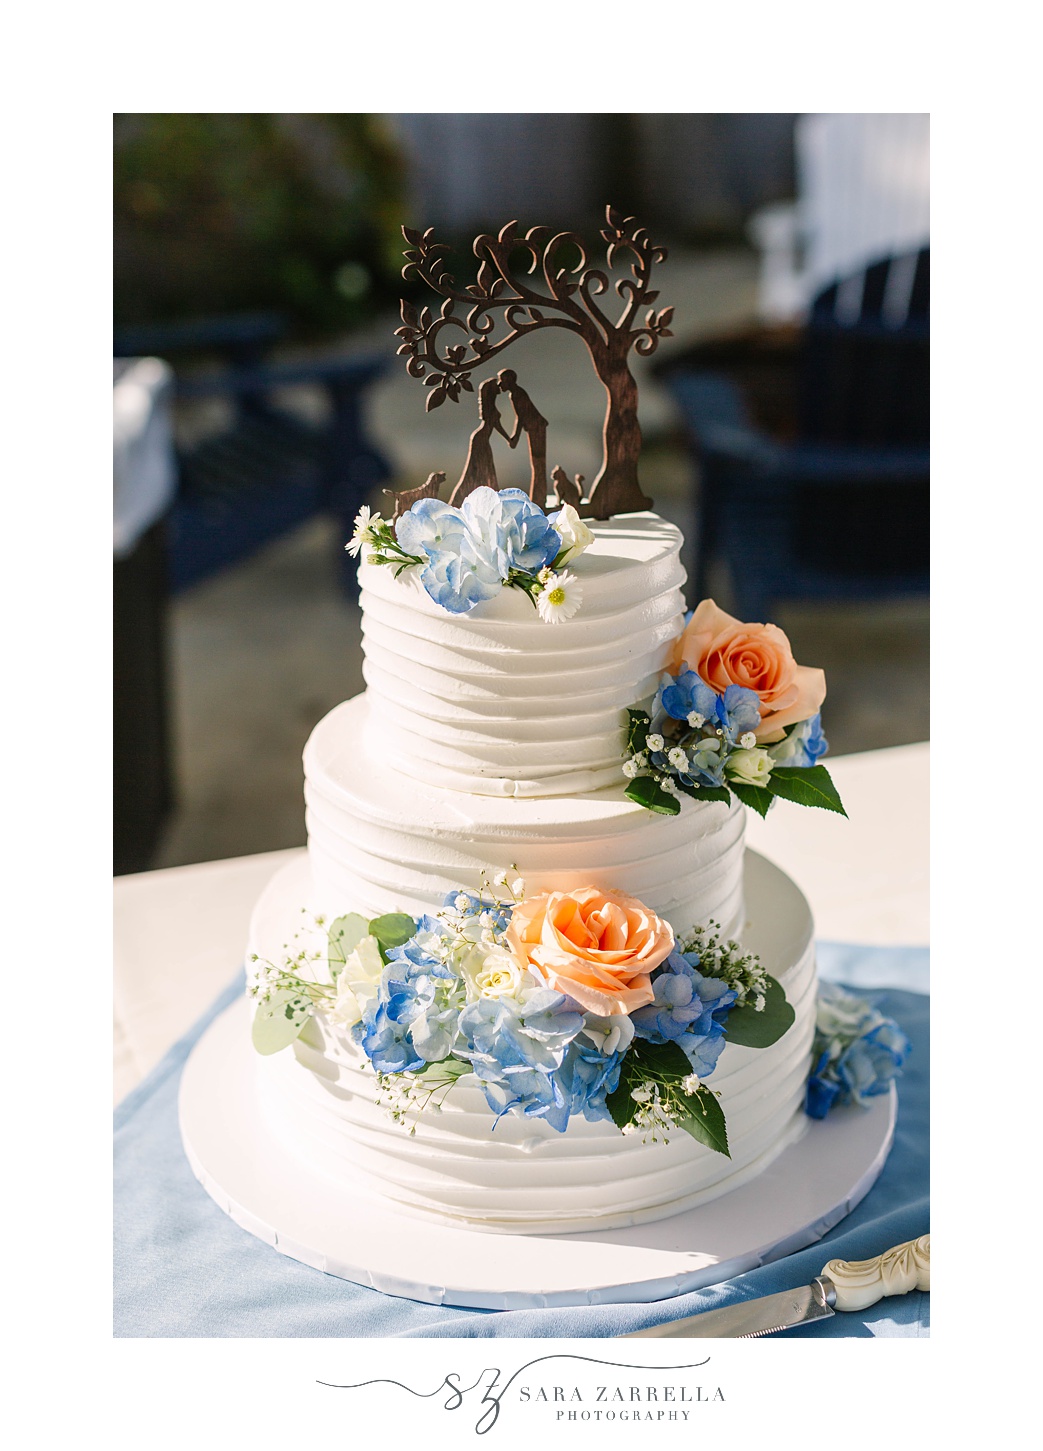 cake for Rhode Island wedding reception